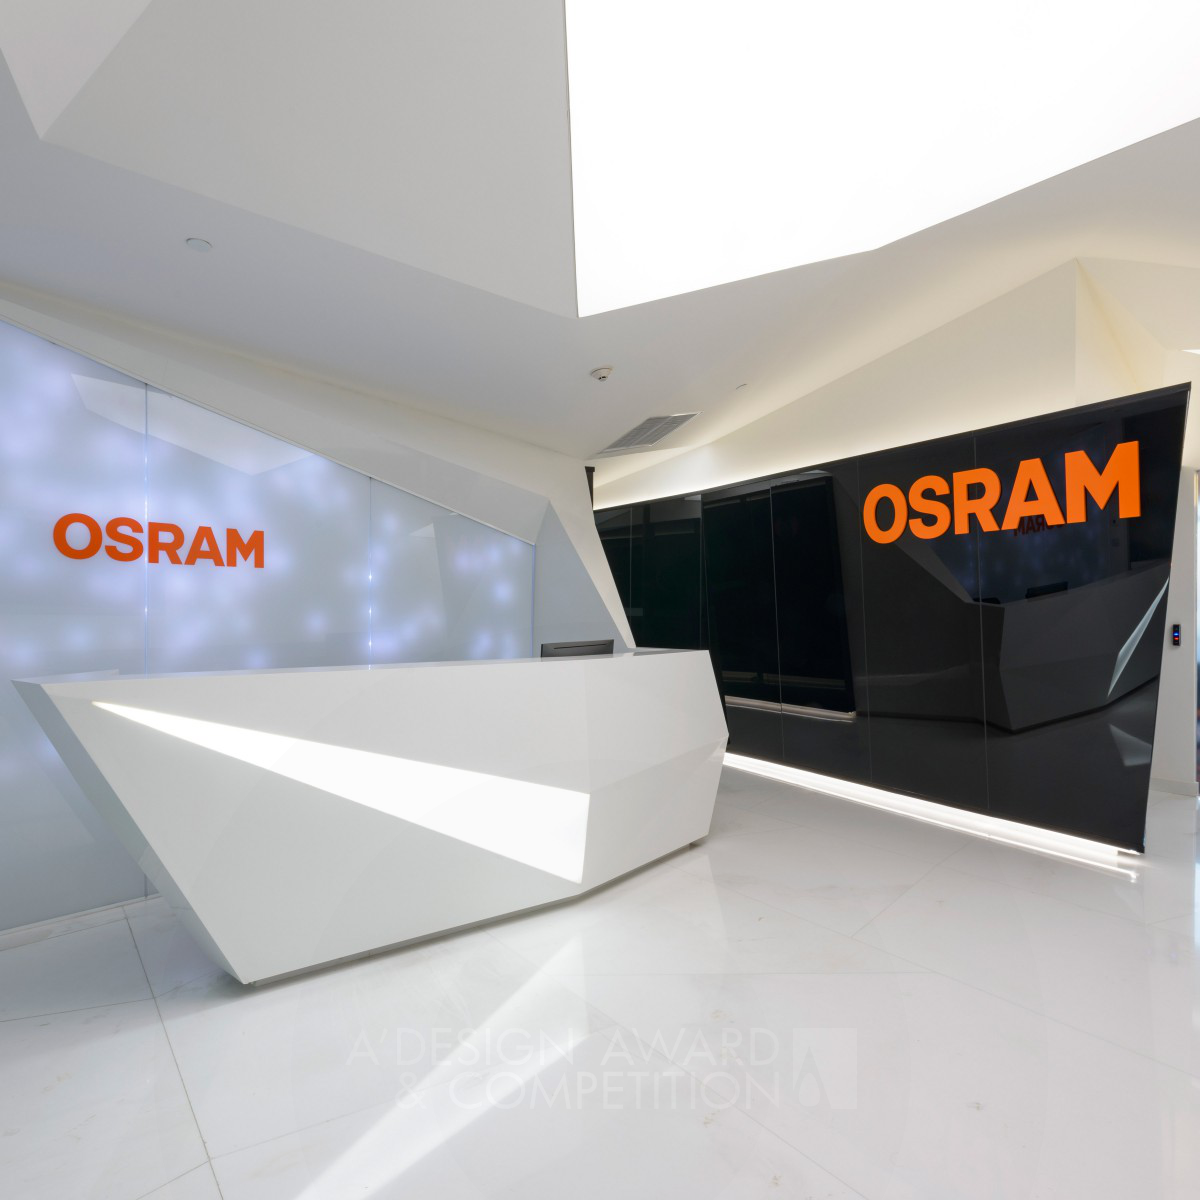 Osram <b>top tier work environment